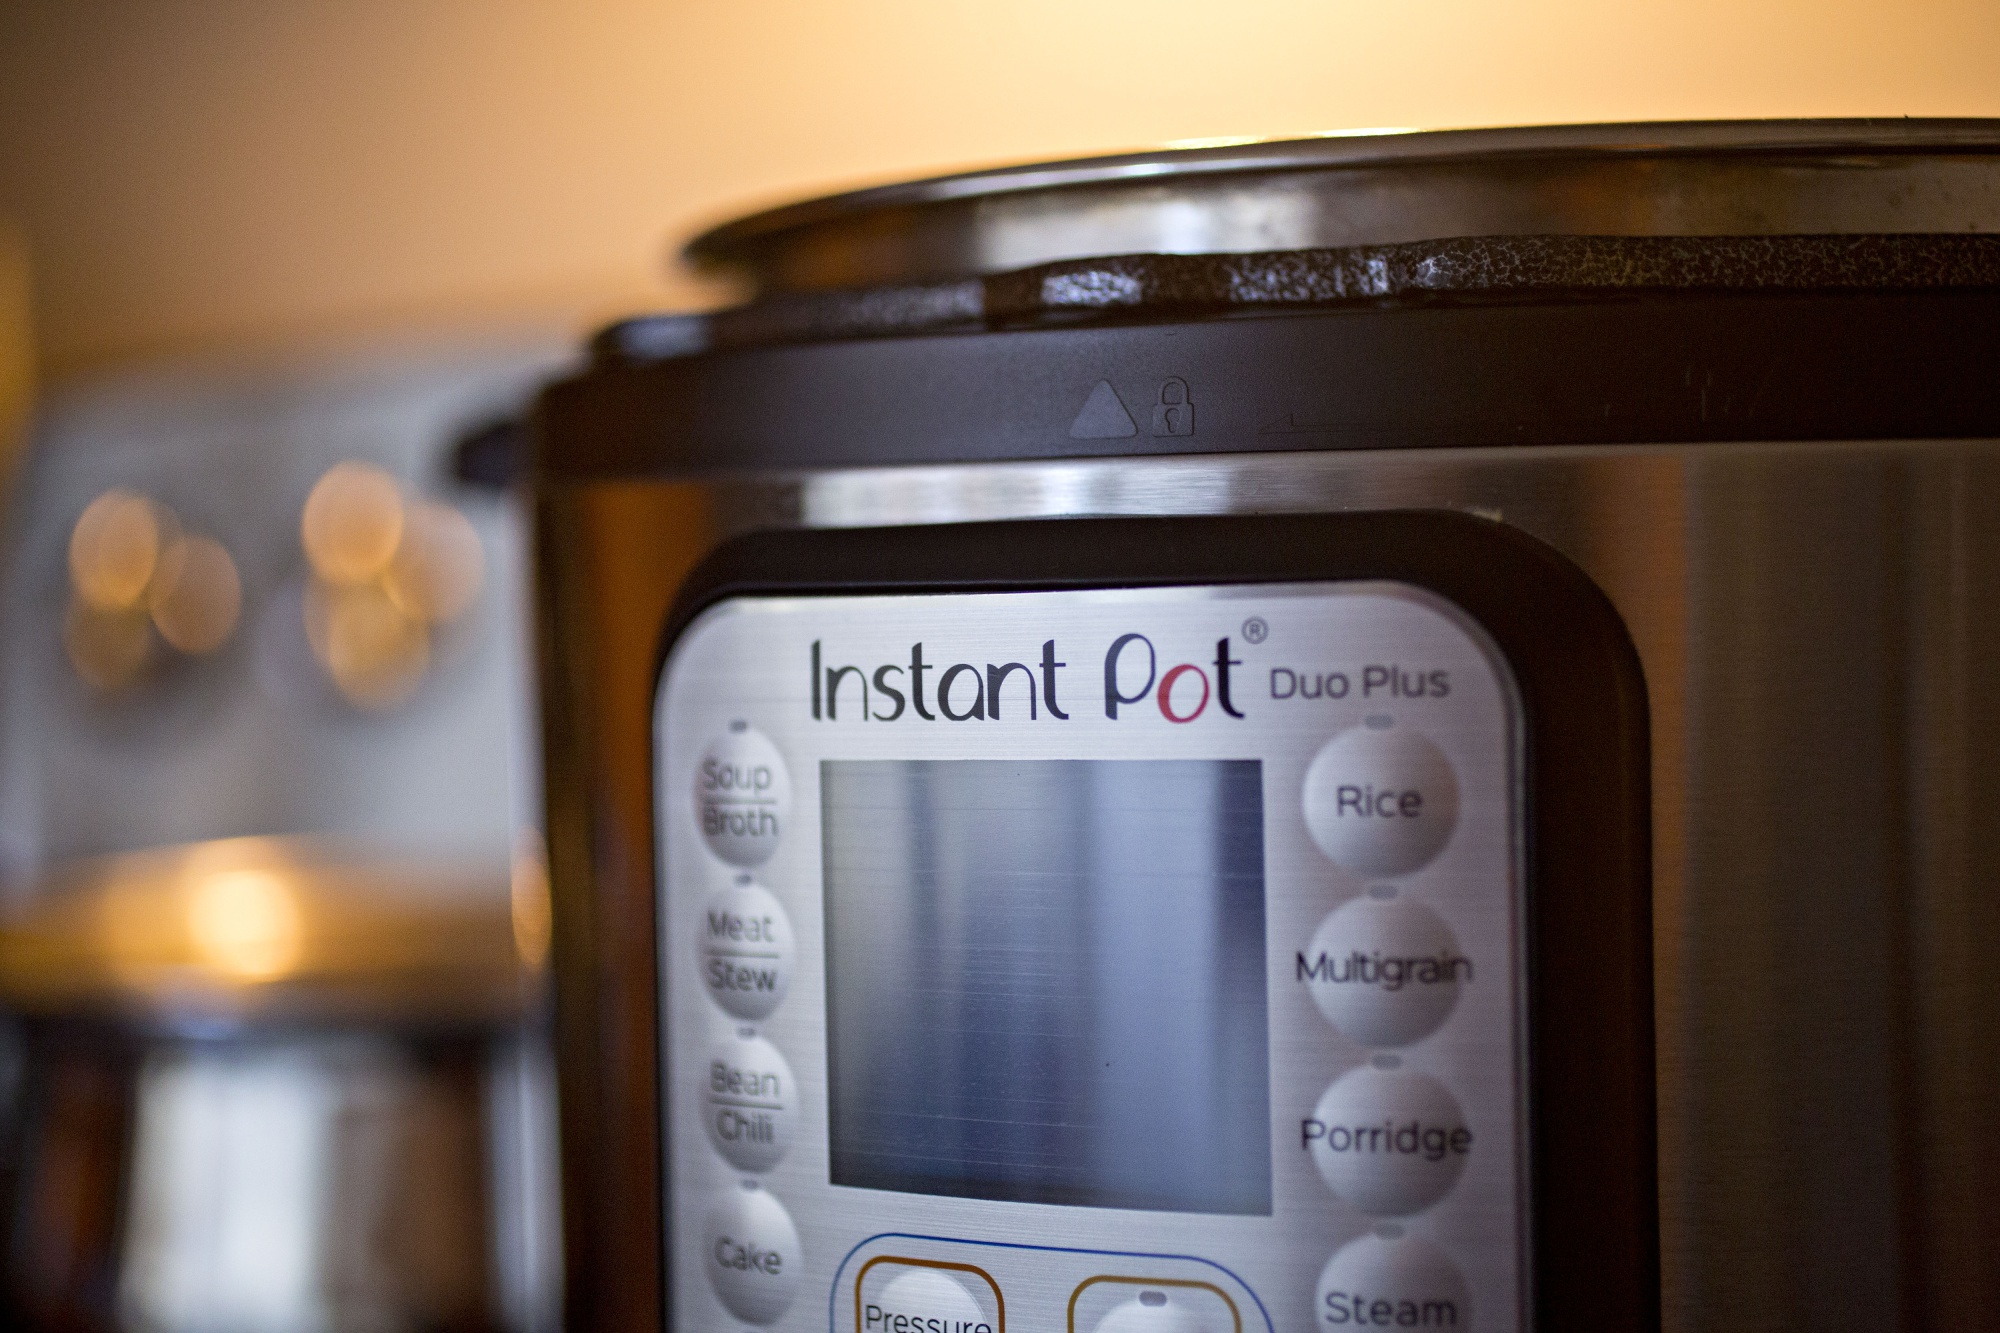 Instant Pot, Pyrex Maker Instant Brands Draws Interest From